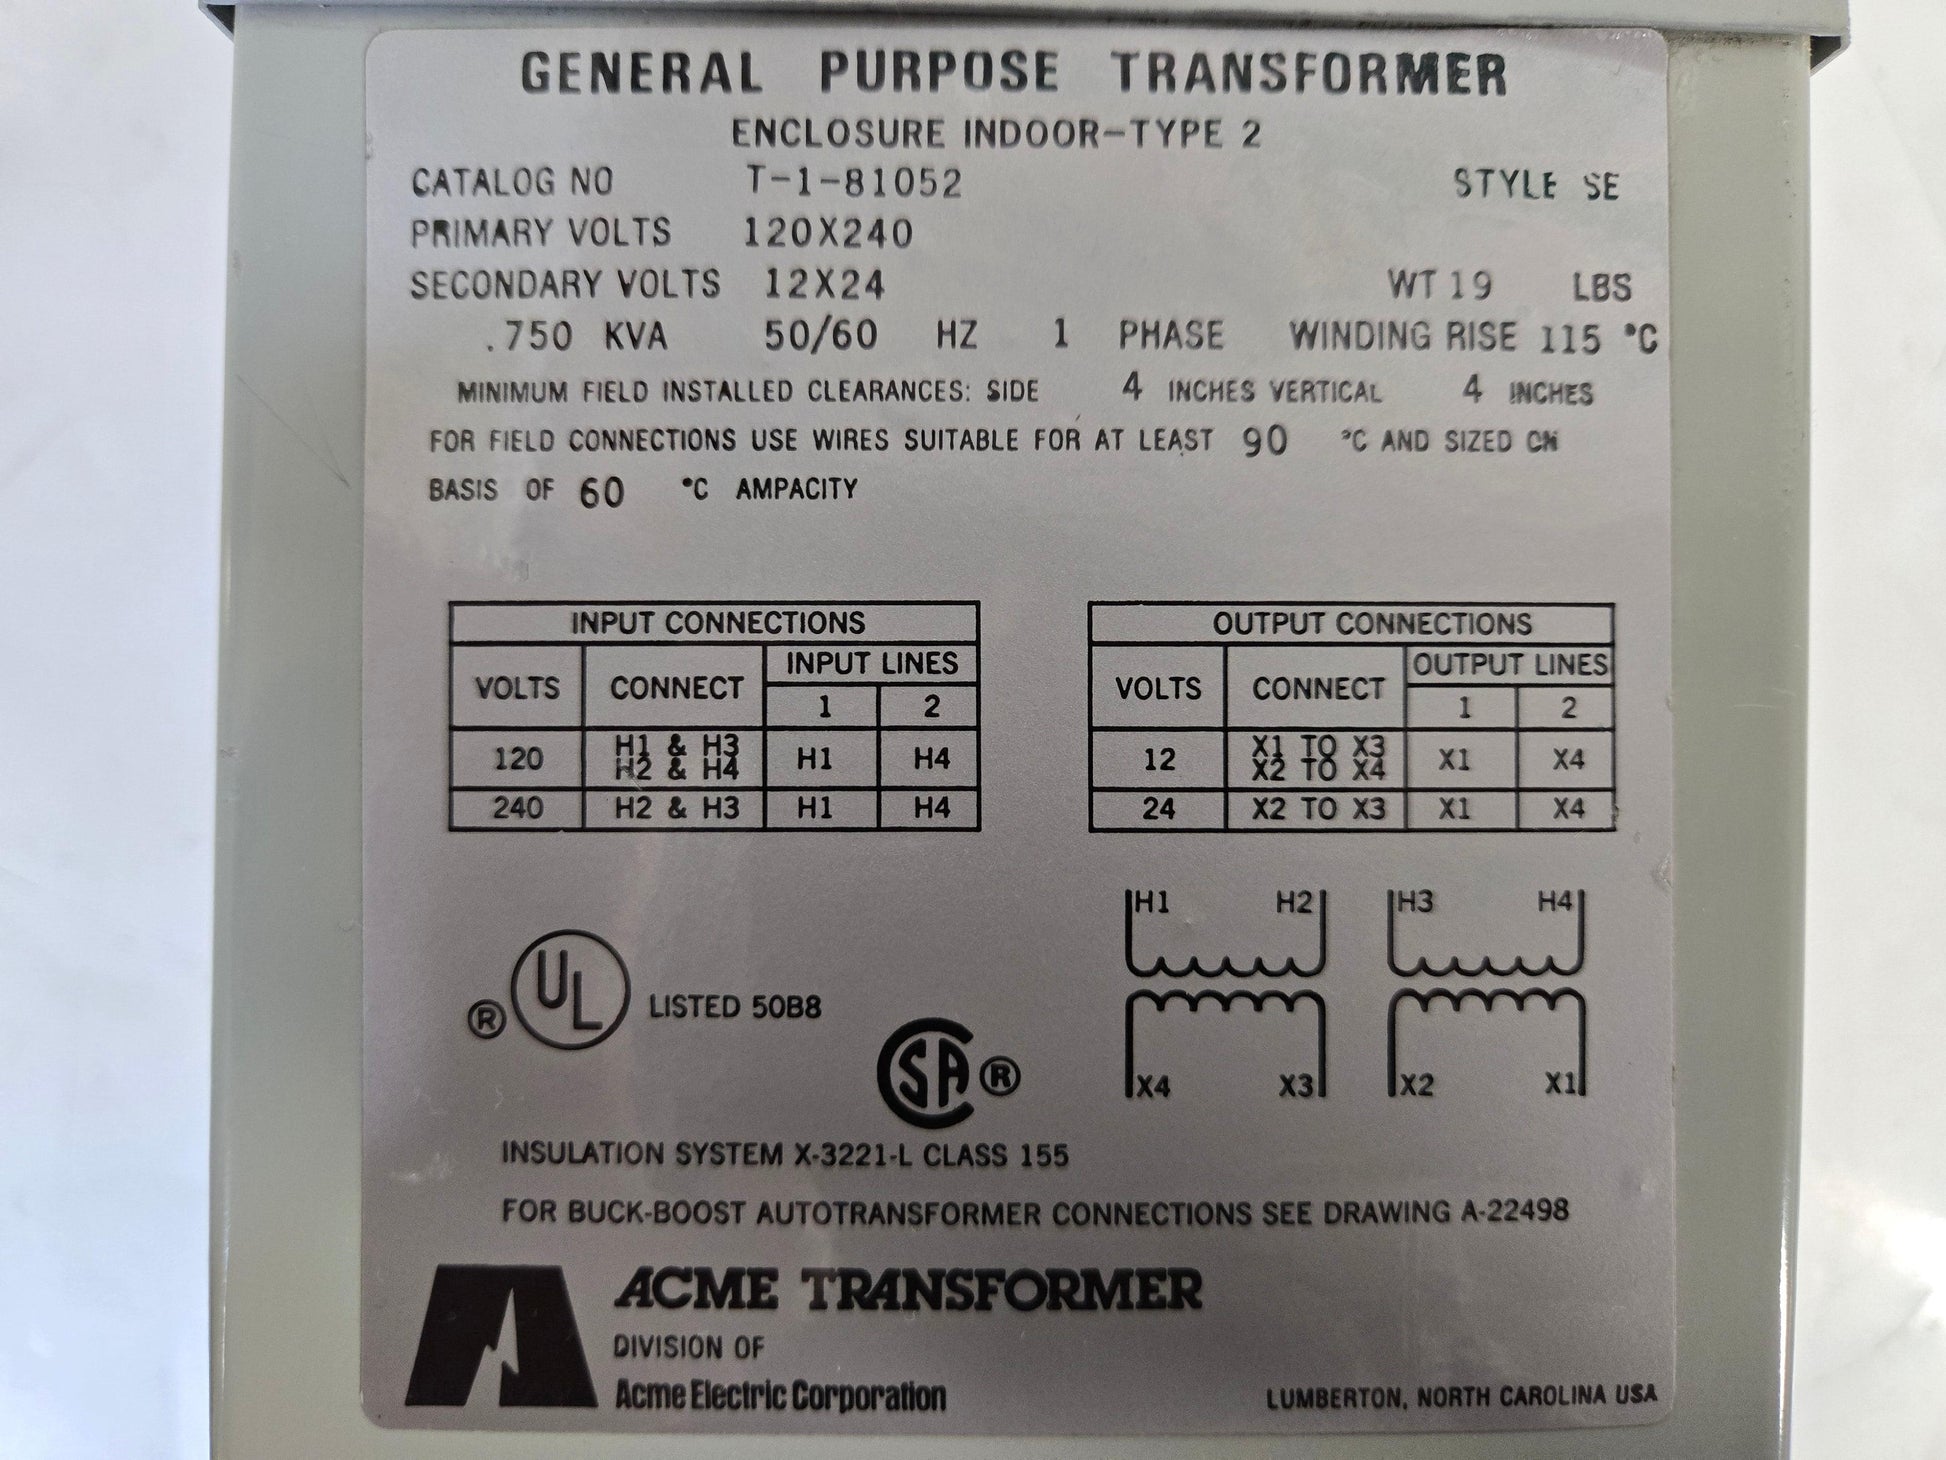 NEW Acme General Purpose Transformer 120/240 .750KVA 1 Phase 50/60Hz MFG# T-1-81052 - MBR Medicals